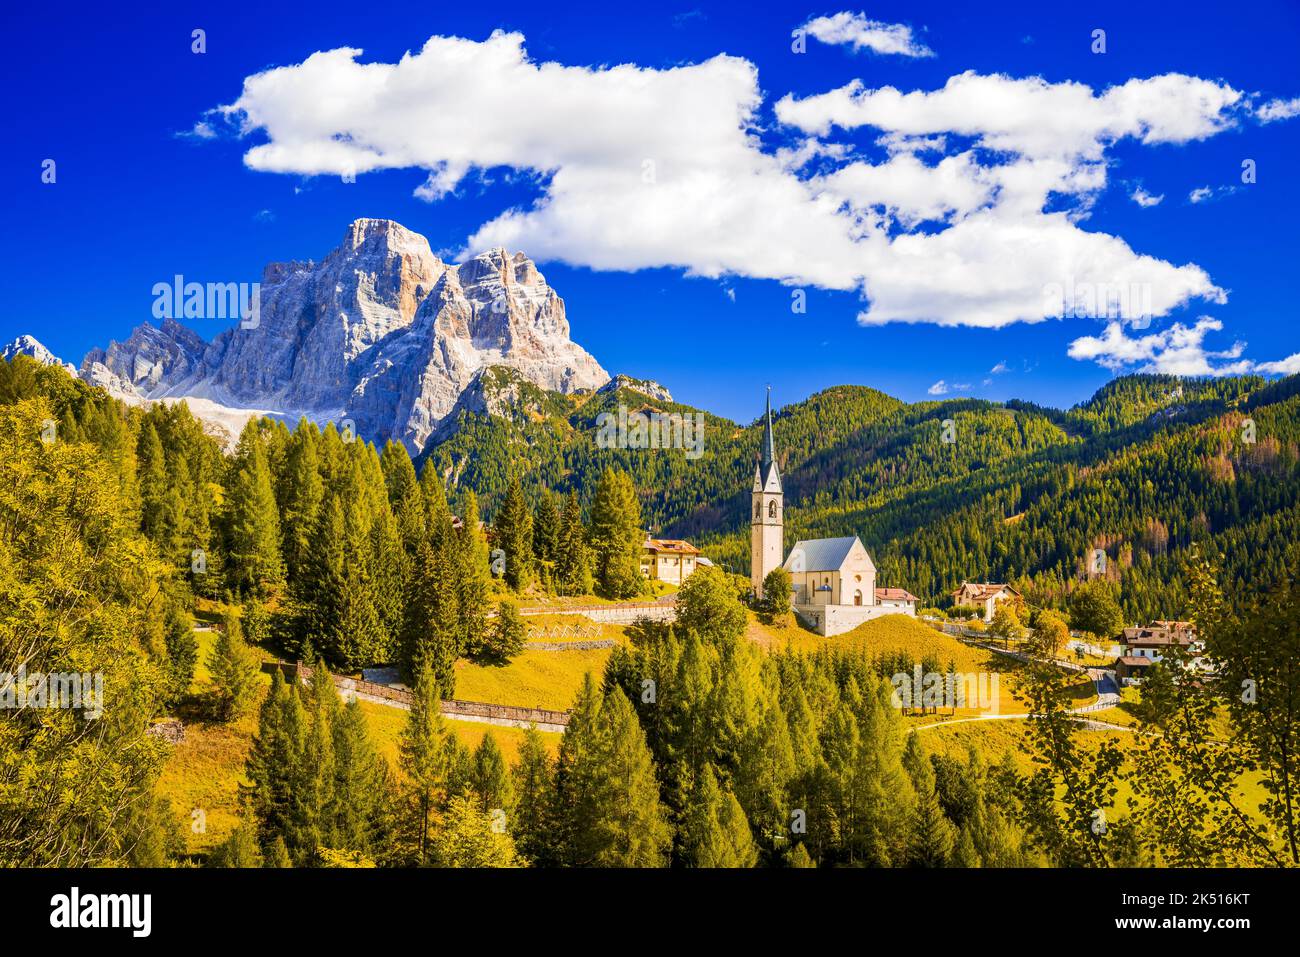 Selva di Cadore, Dolomites. Beautiful famous landscape with the church and Mount Pelmo, Belluno region of Italy. Stock Photo